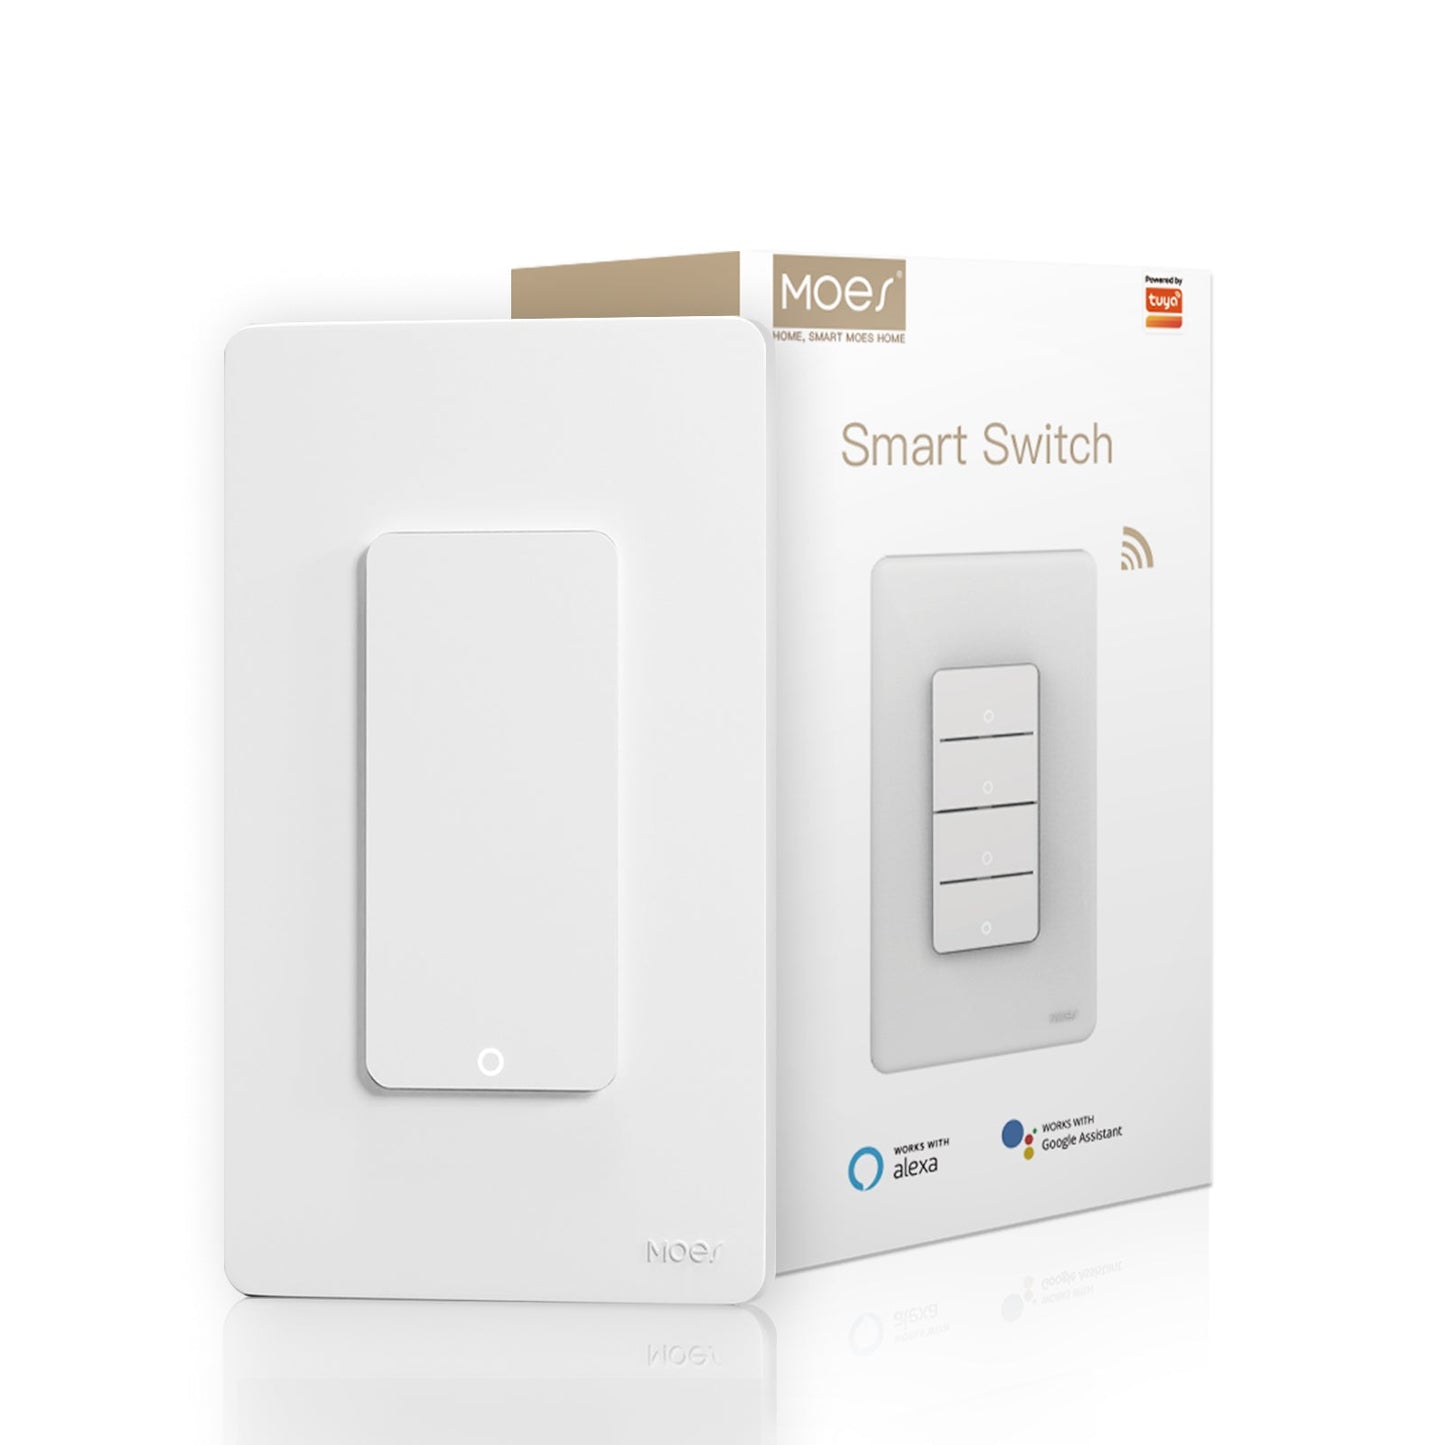 MOES Smart Light Switch White Mini Push Button WiFi Switch APP Remote